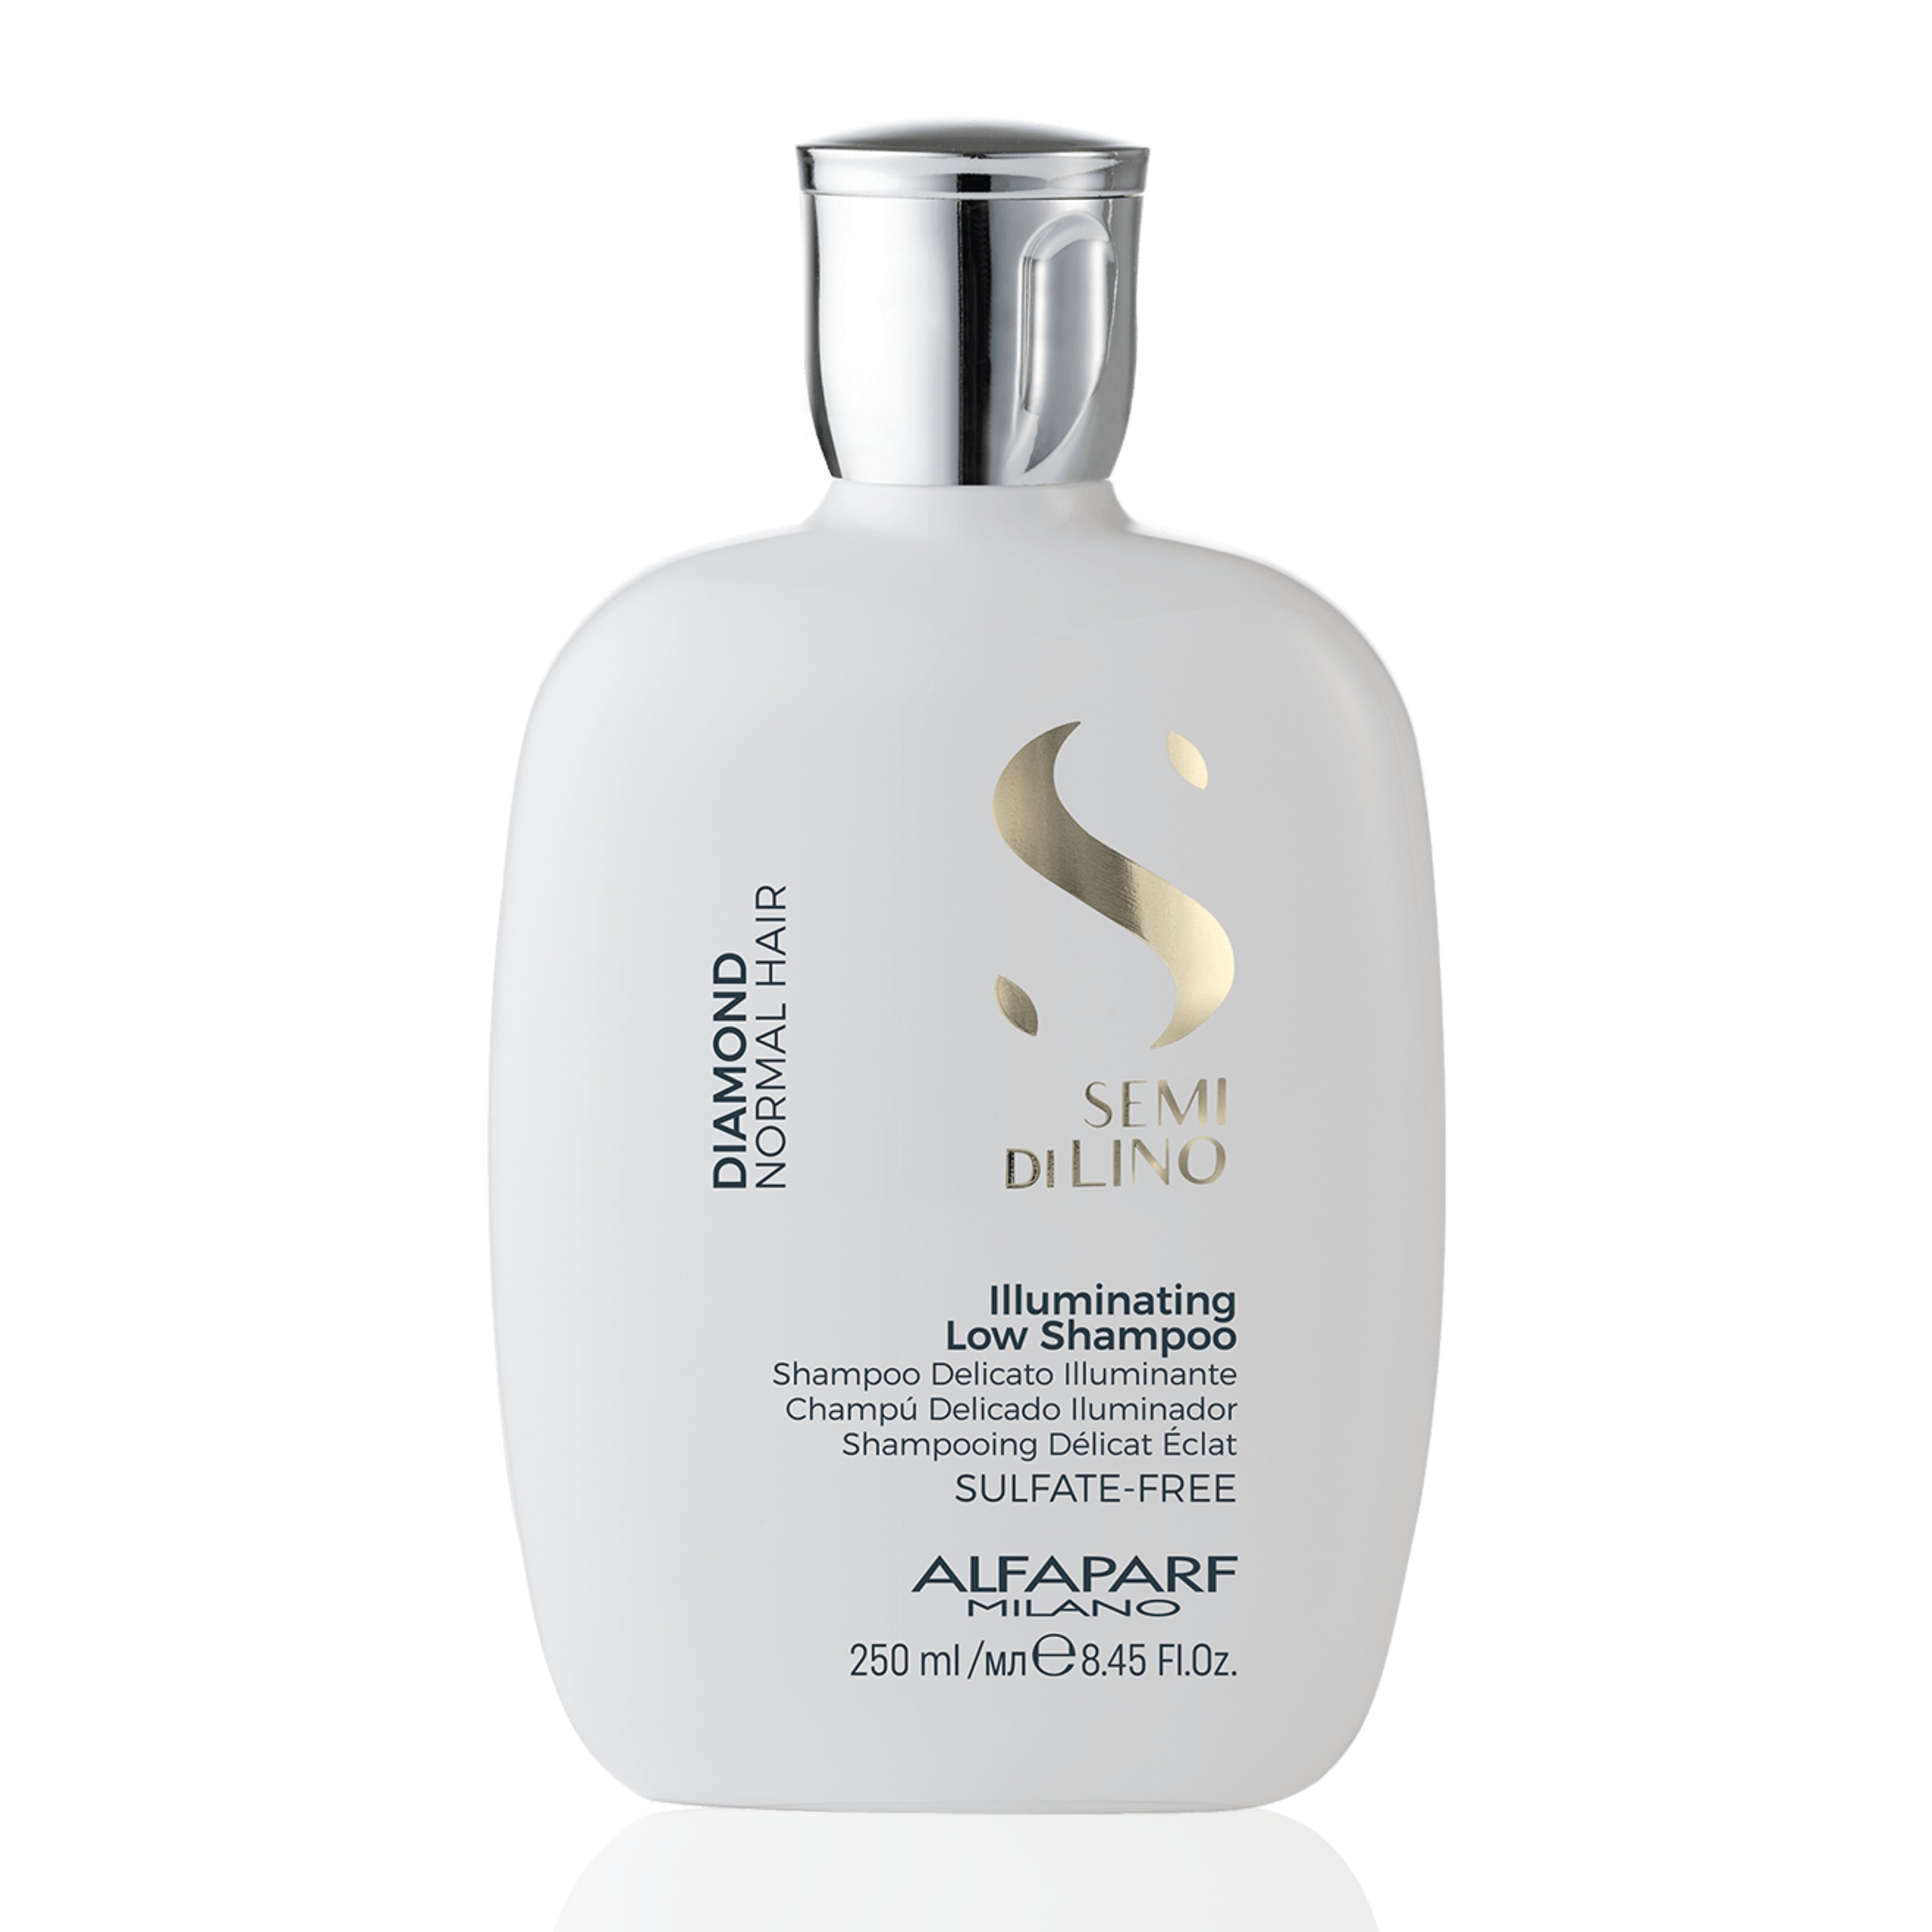 ALFAPARF MILANO SEMI DI LINO Illuminating Low Shampoo 250ML